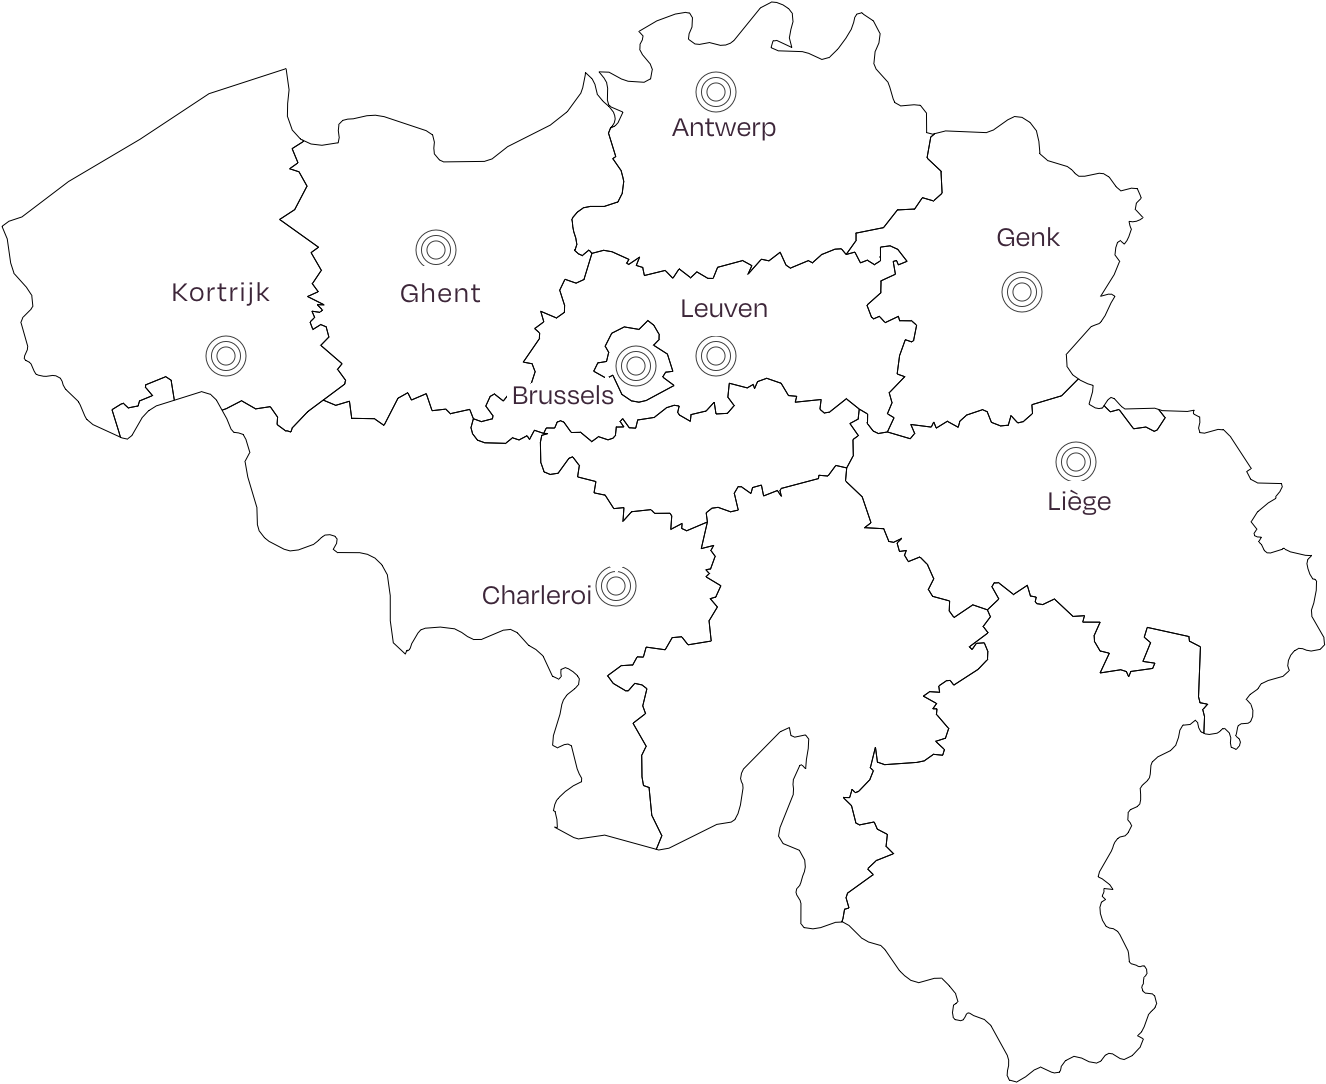 Sirris locations